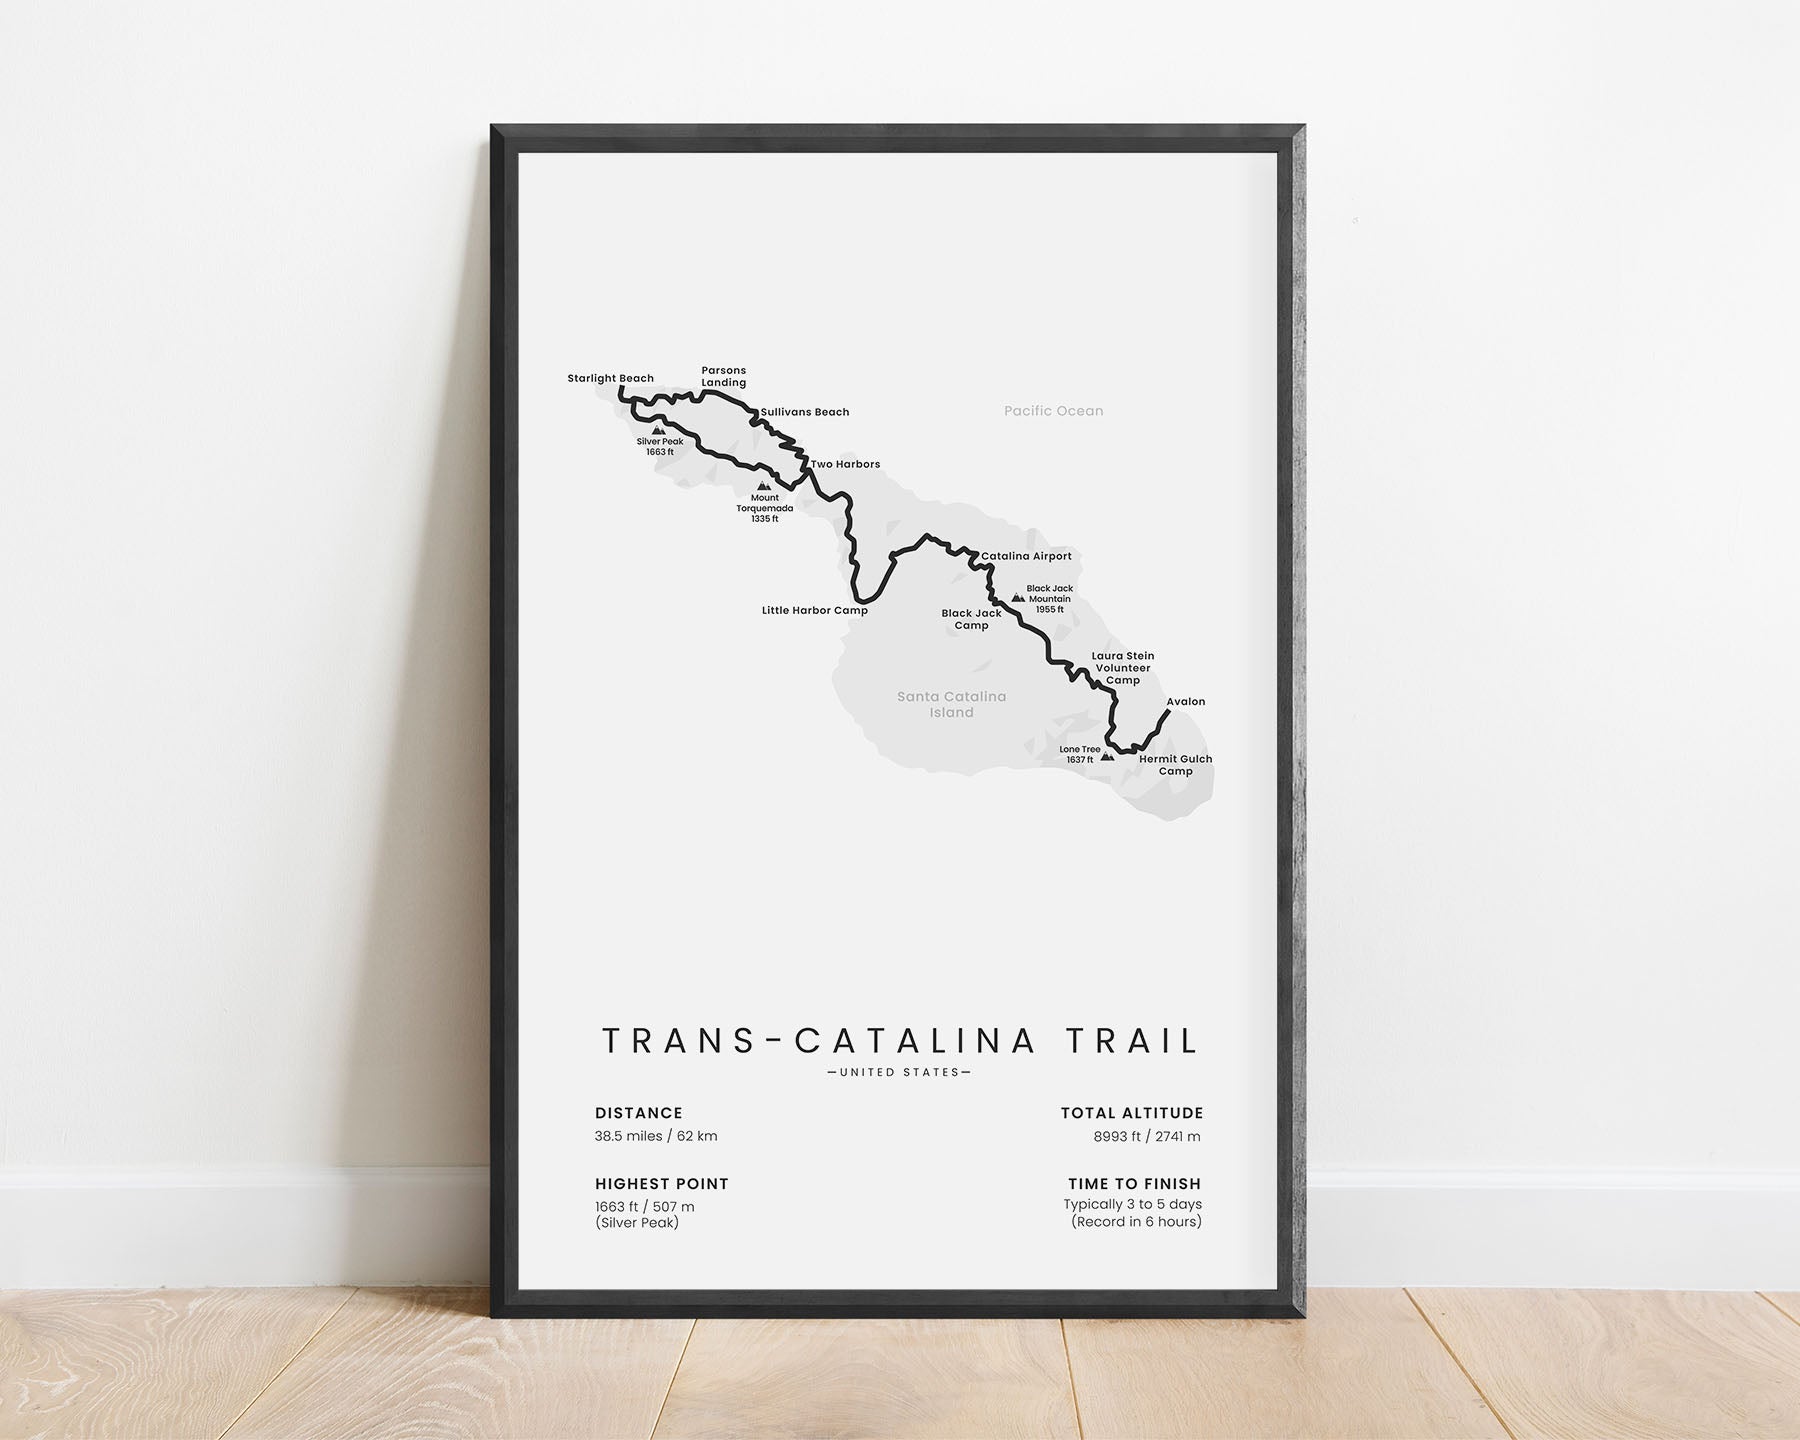 Trans-Catalina Trail (Santa Catalina Island) thru hike poster with white background